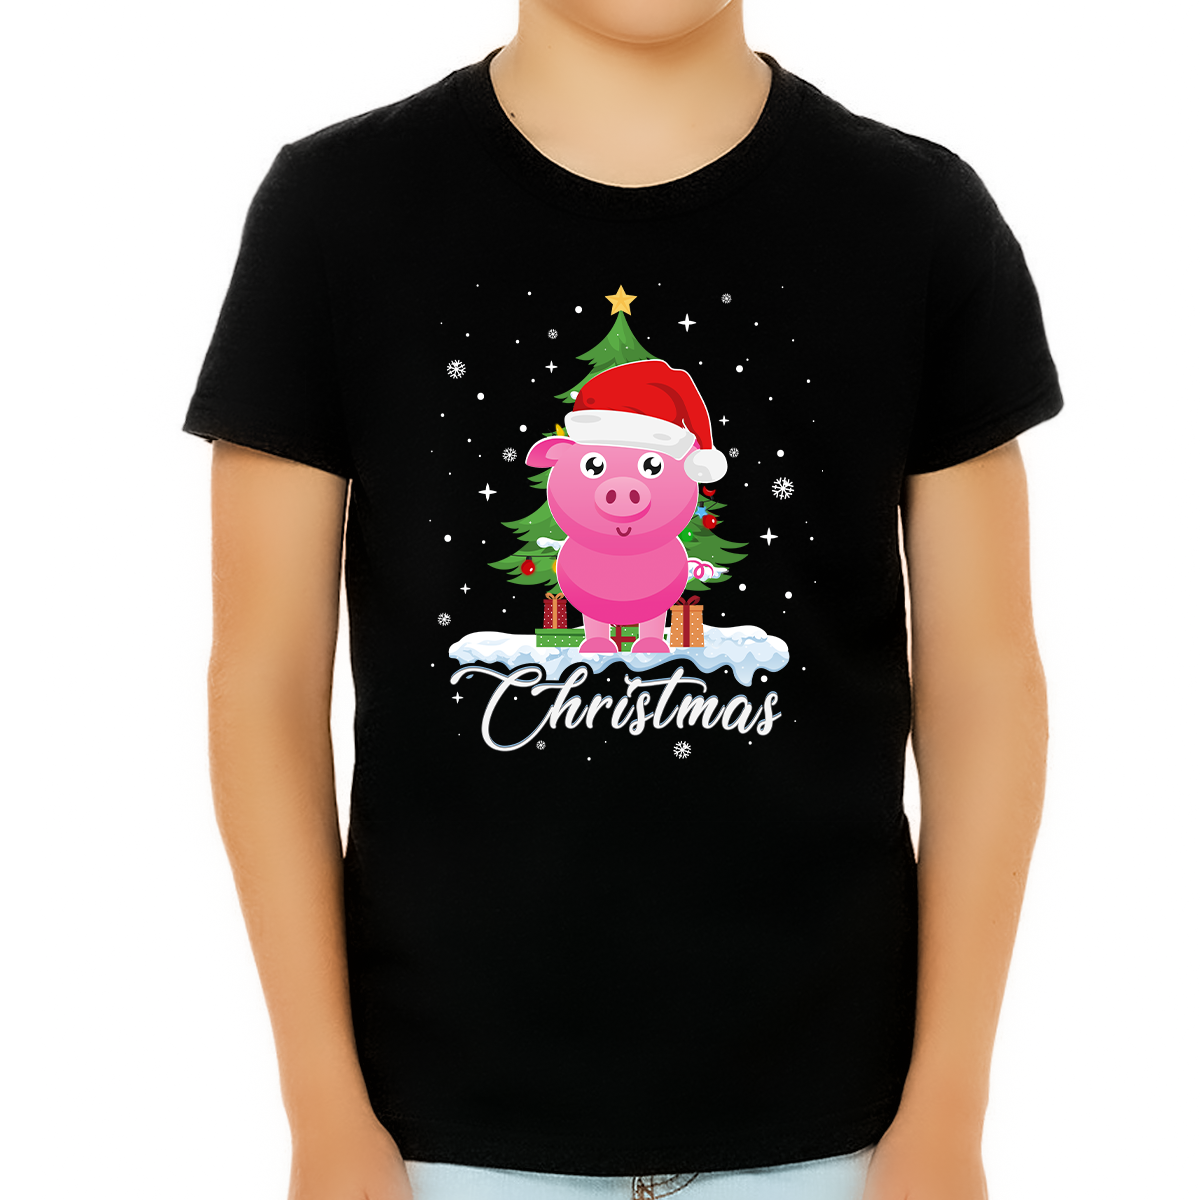 Boys Christmas Shirt Cute Santa Pig Christmas Shirts for Boys Christmas Shirts for Kids